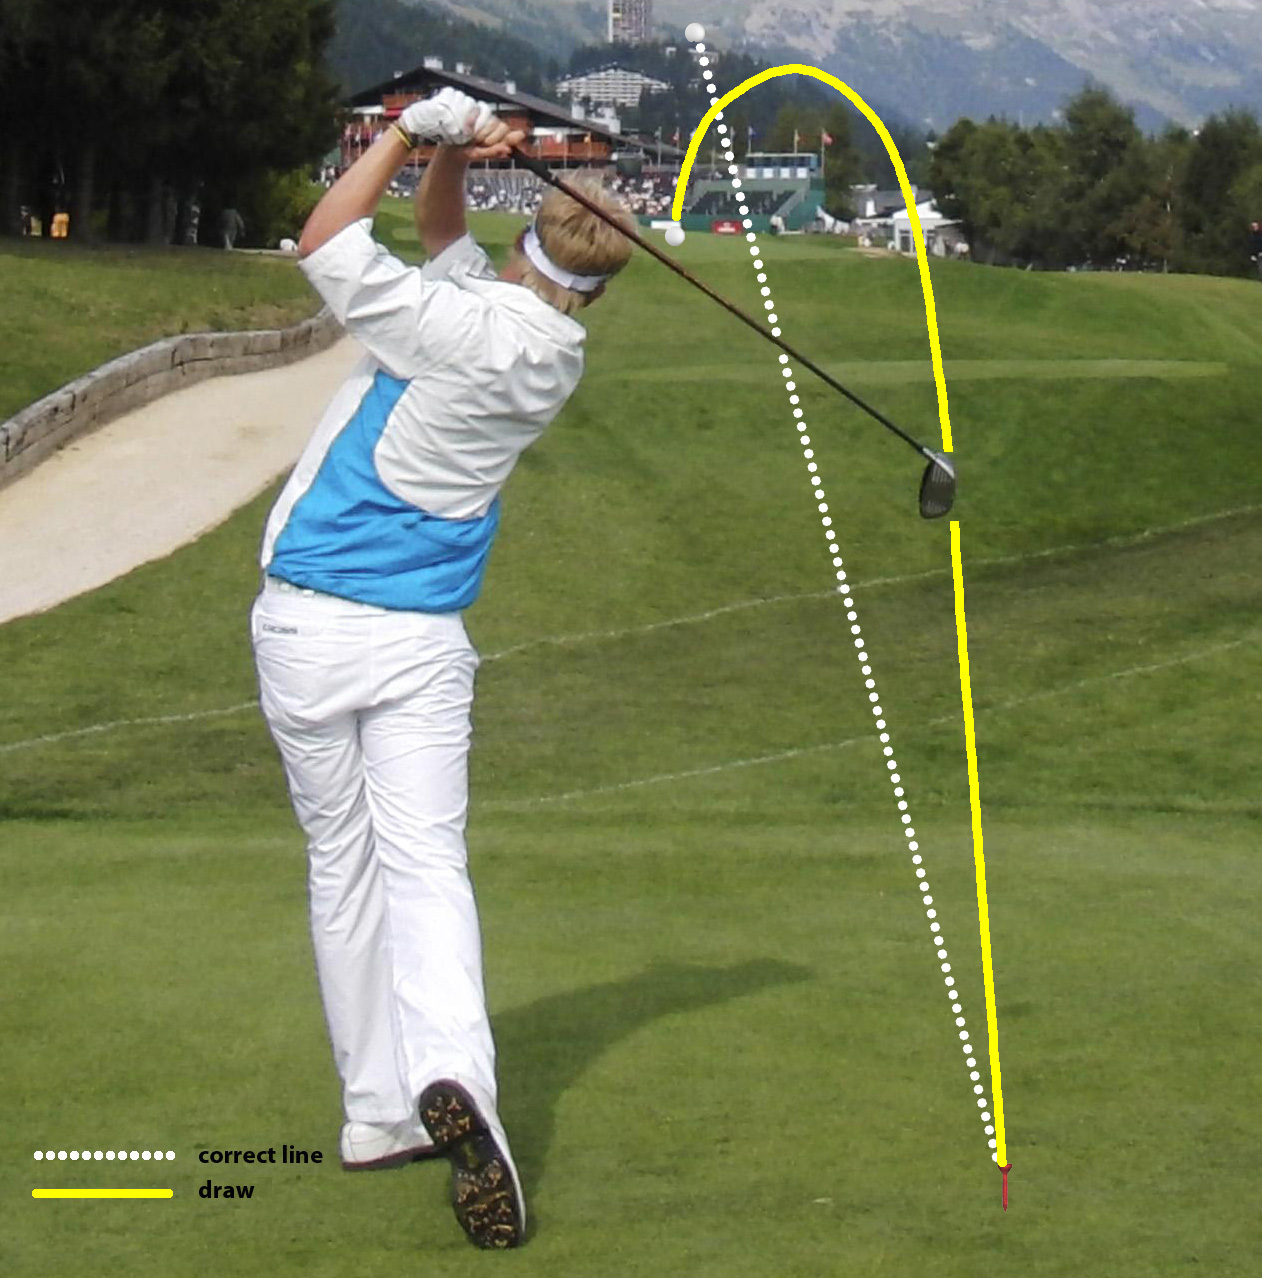 golf swing draw vs. fade